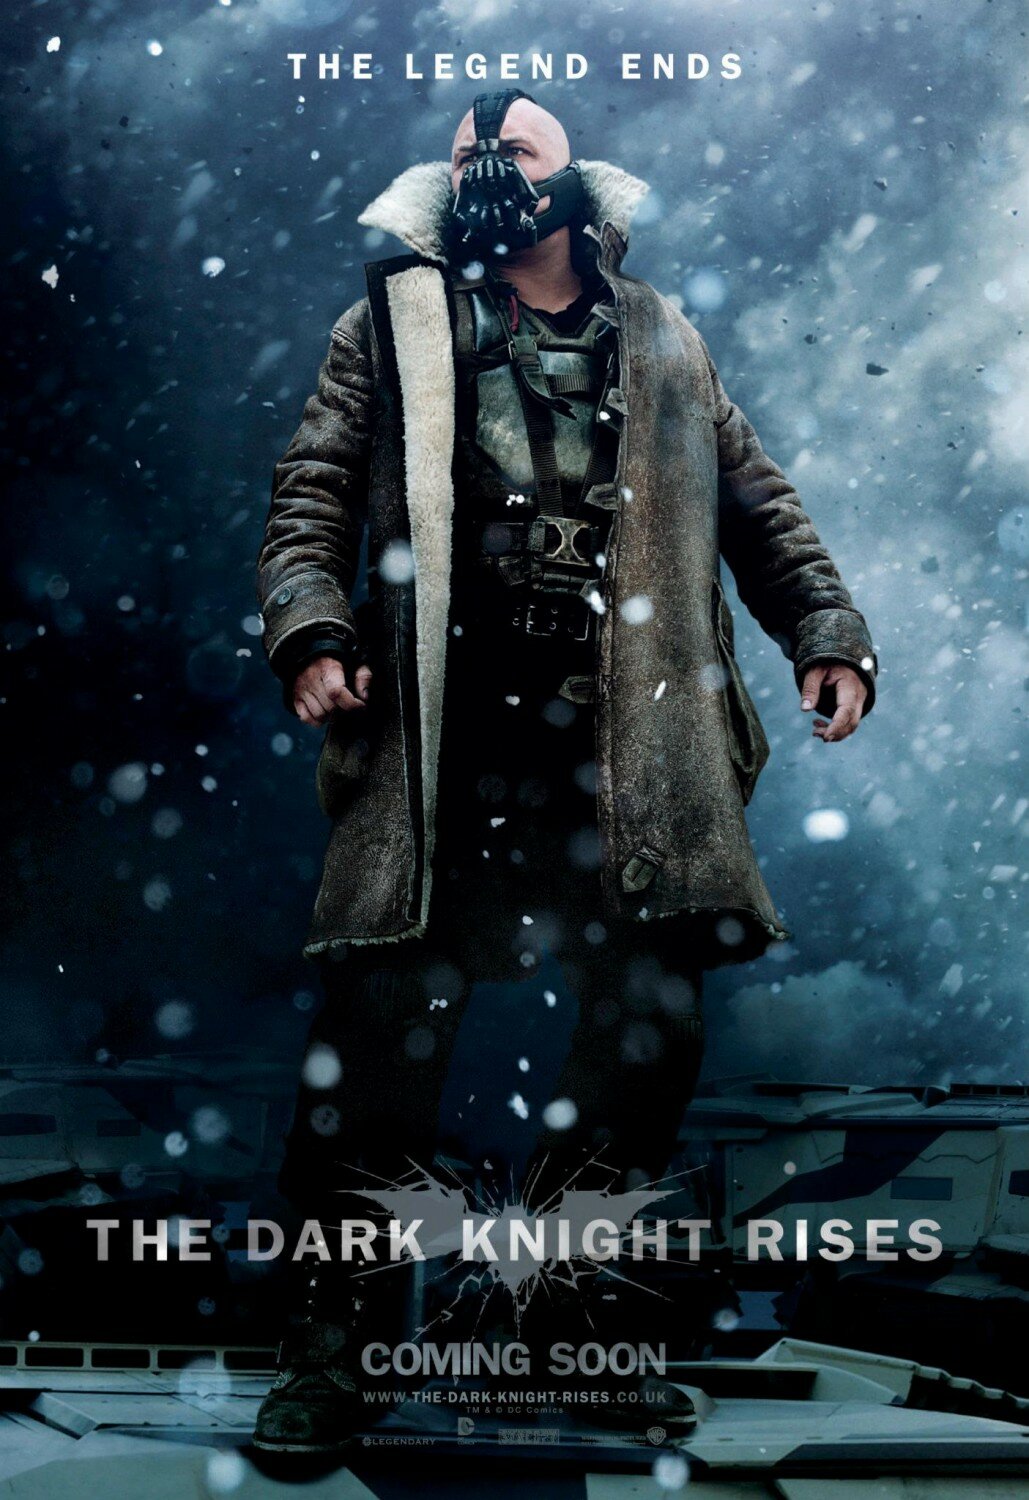 The Joker's Racist Rhetoric in Christopher Nolan's The Dark Knight